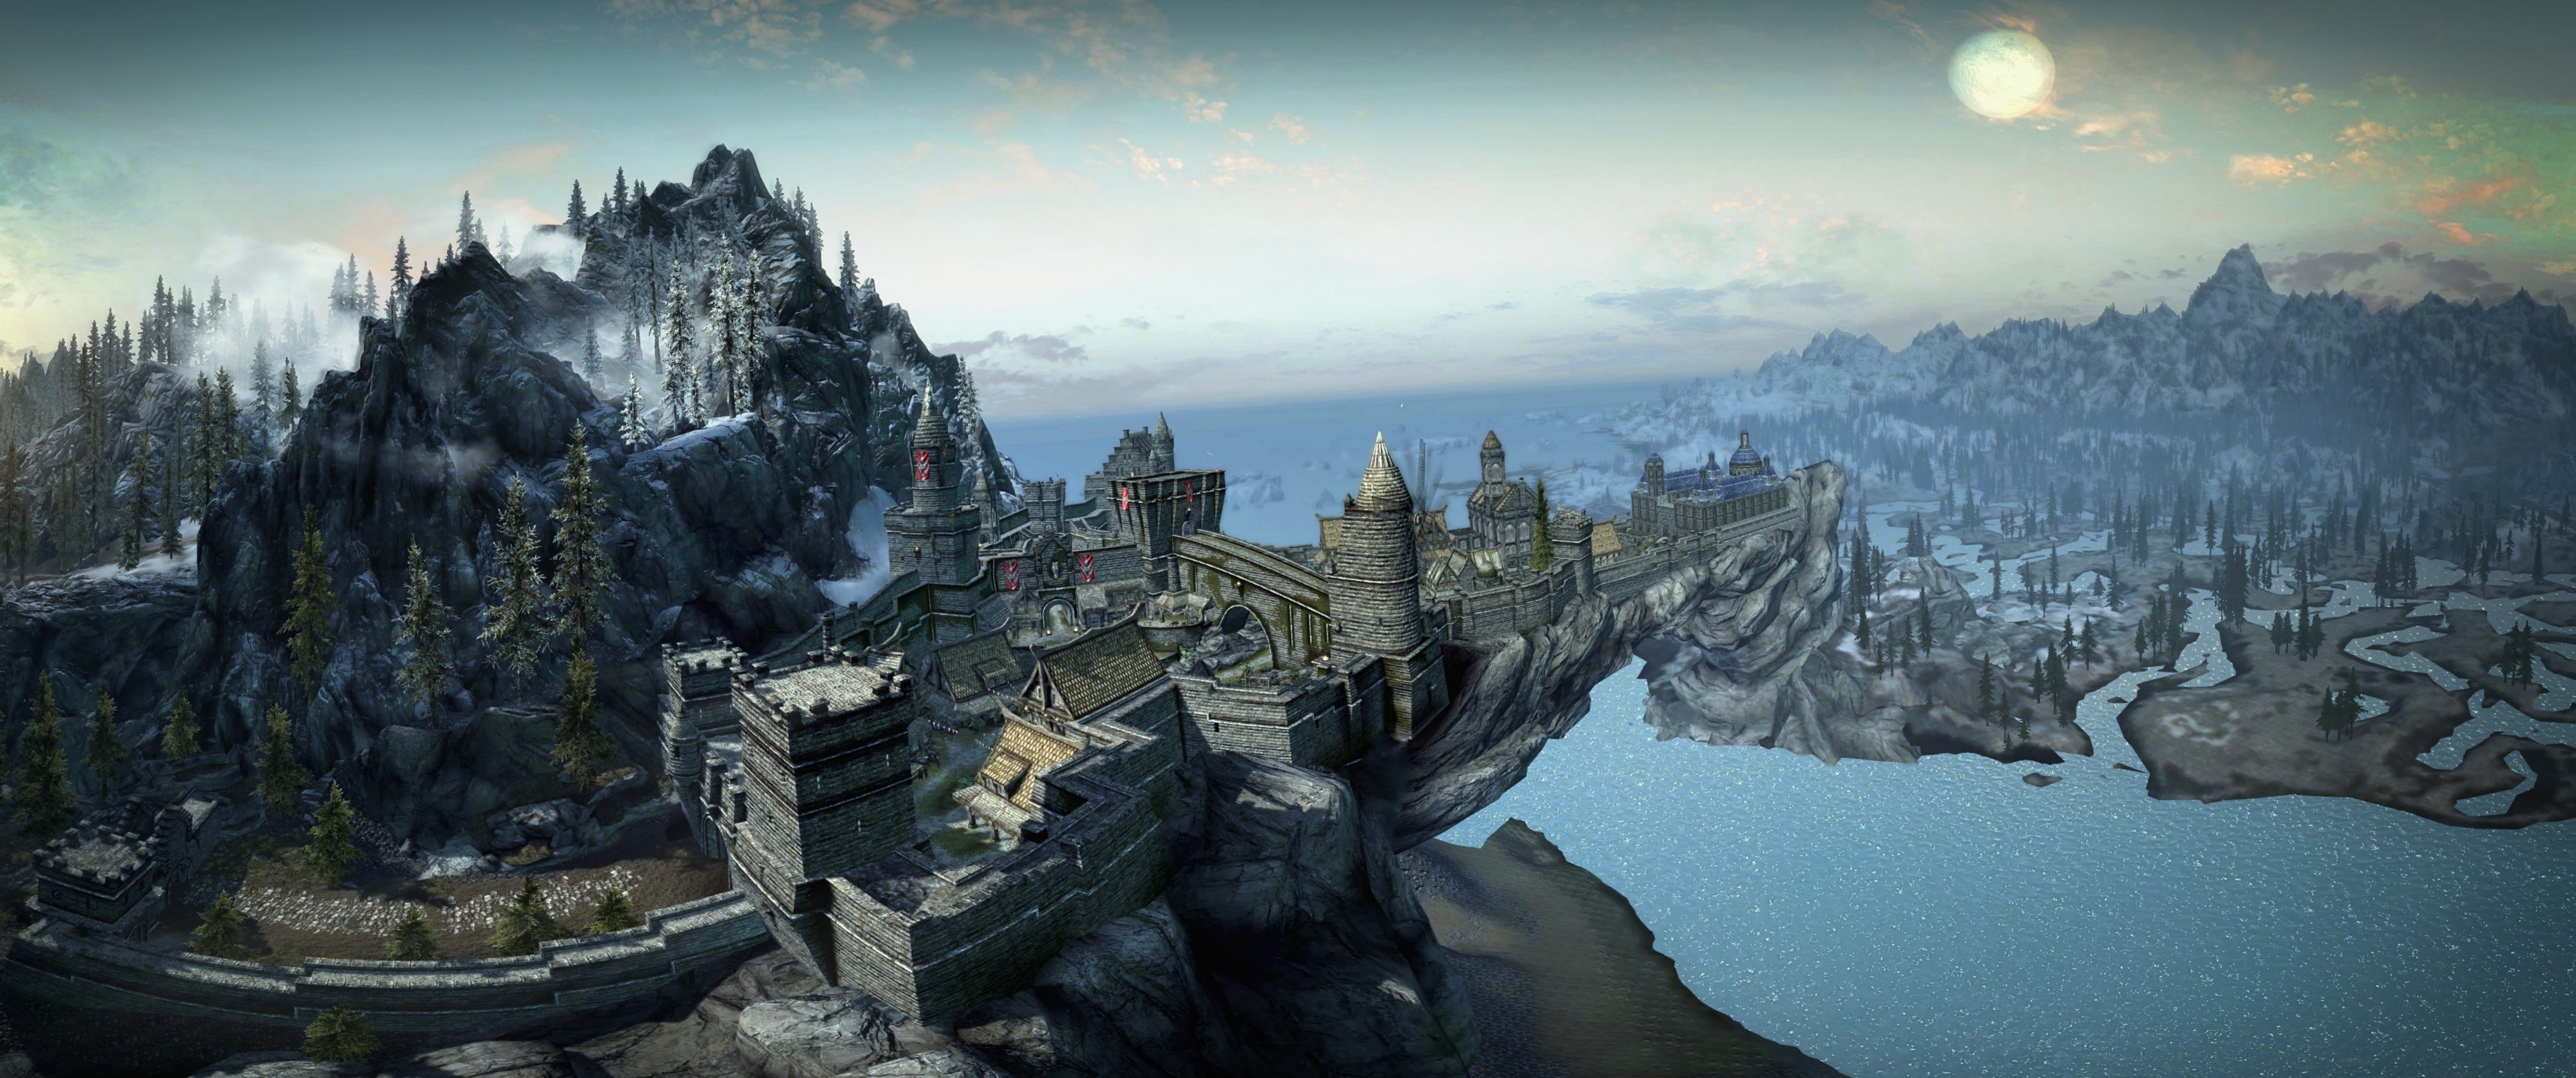 General 3440x1440 The Elder Scrolls V: Skyrim video games castle mountains trees sea video game landscape PC gaming RPG